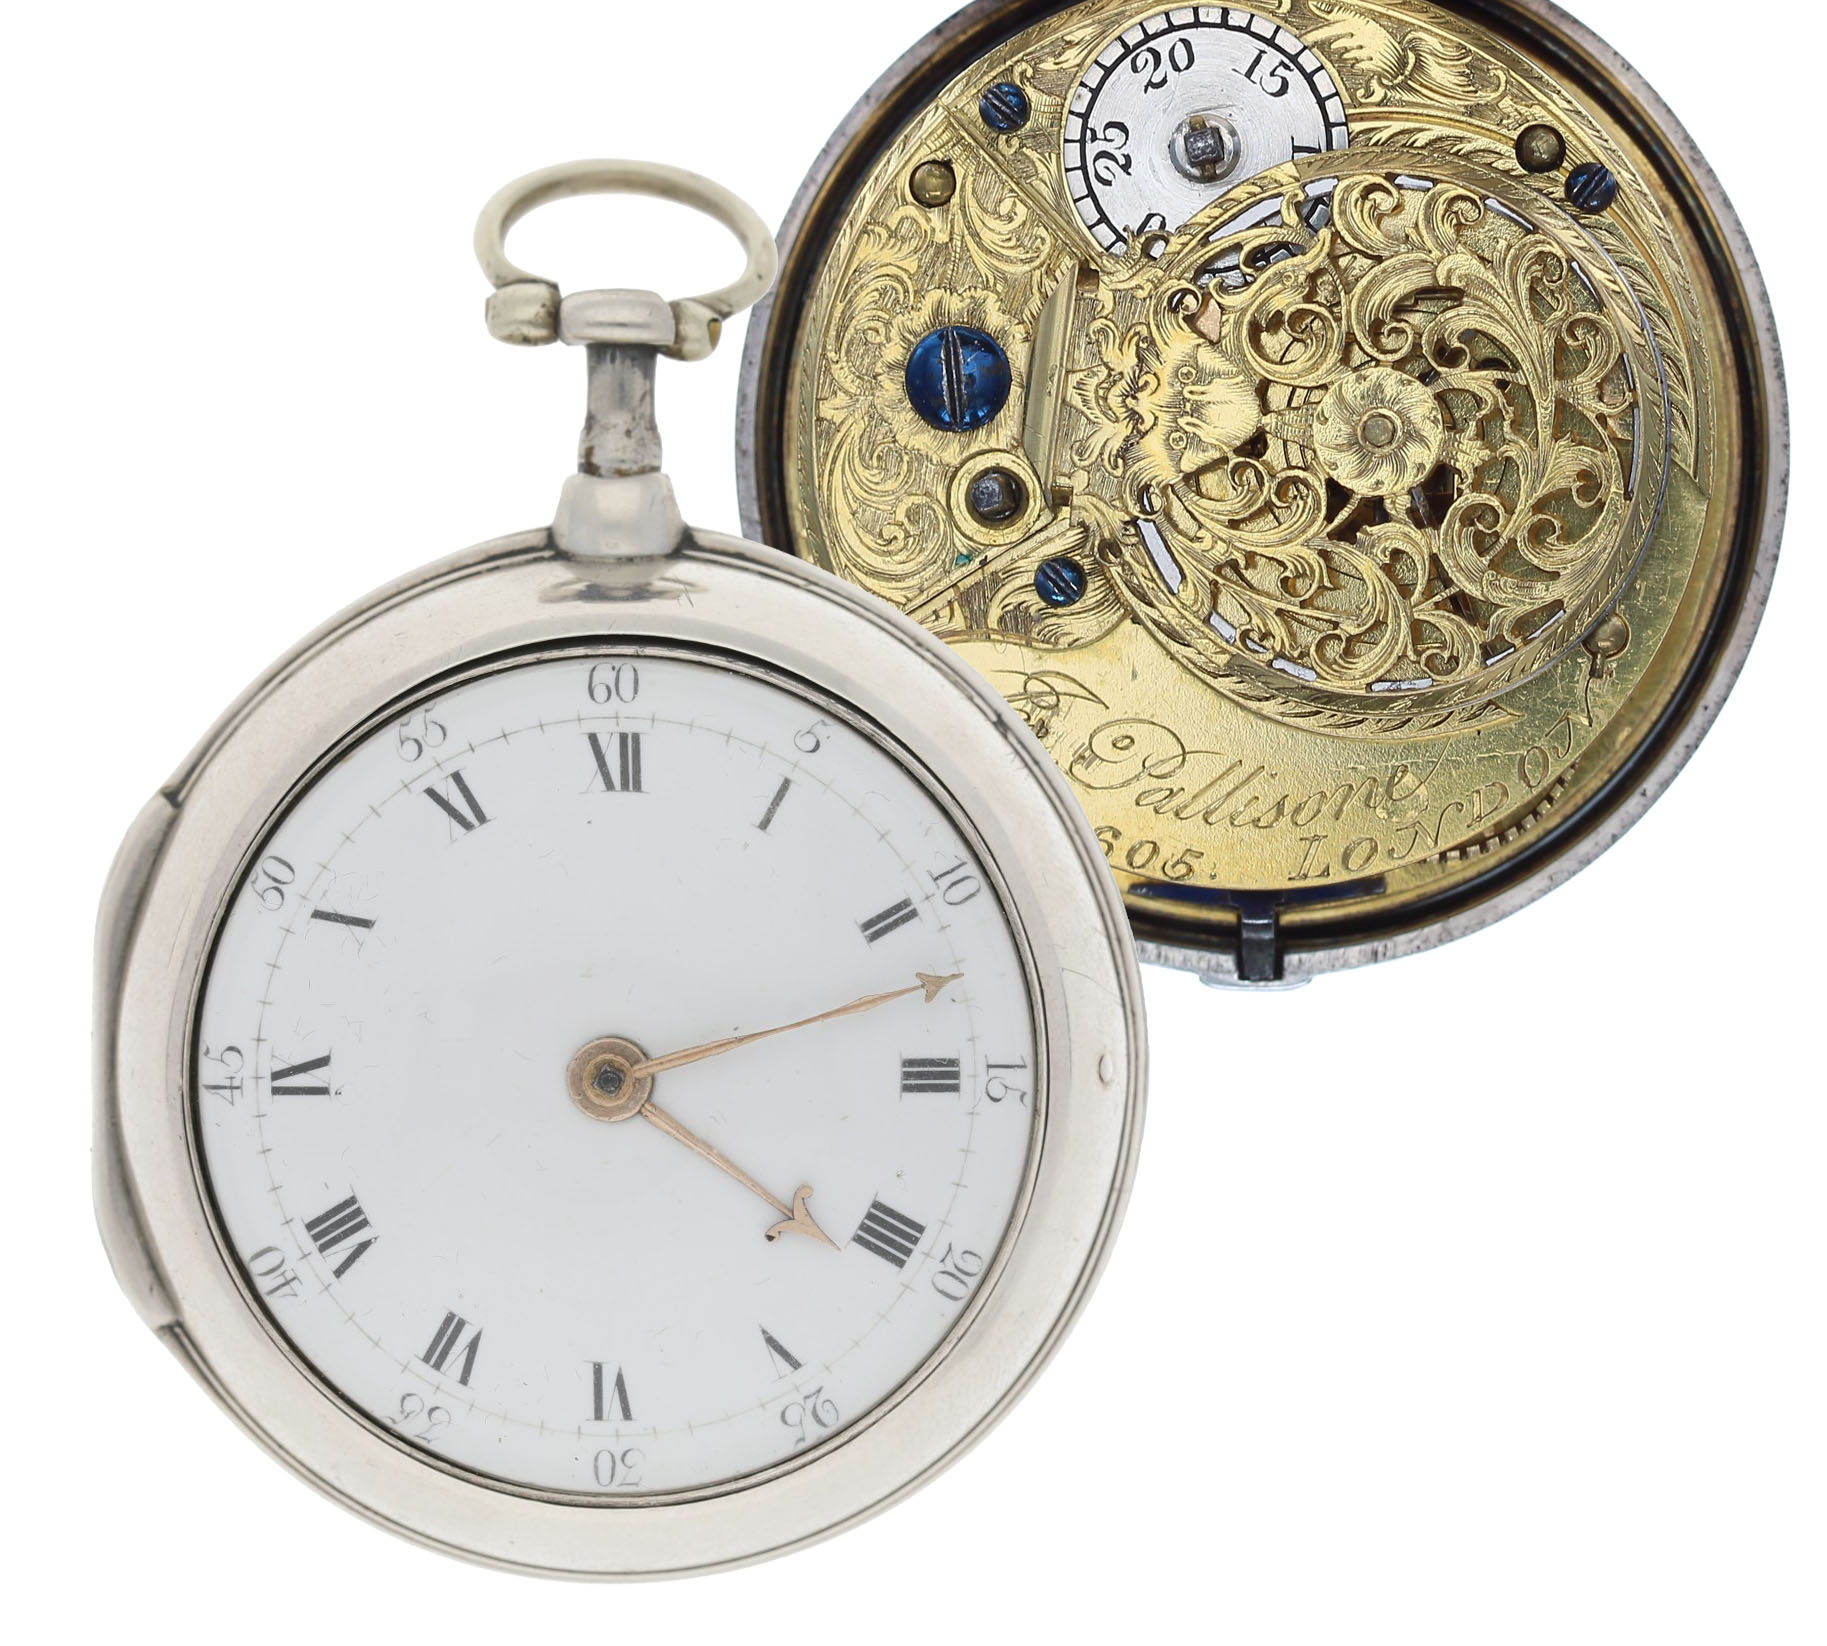 Jon Pallisone, London - George III silver pair cased verge pocket watch, London 1797, signed fusee